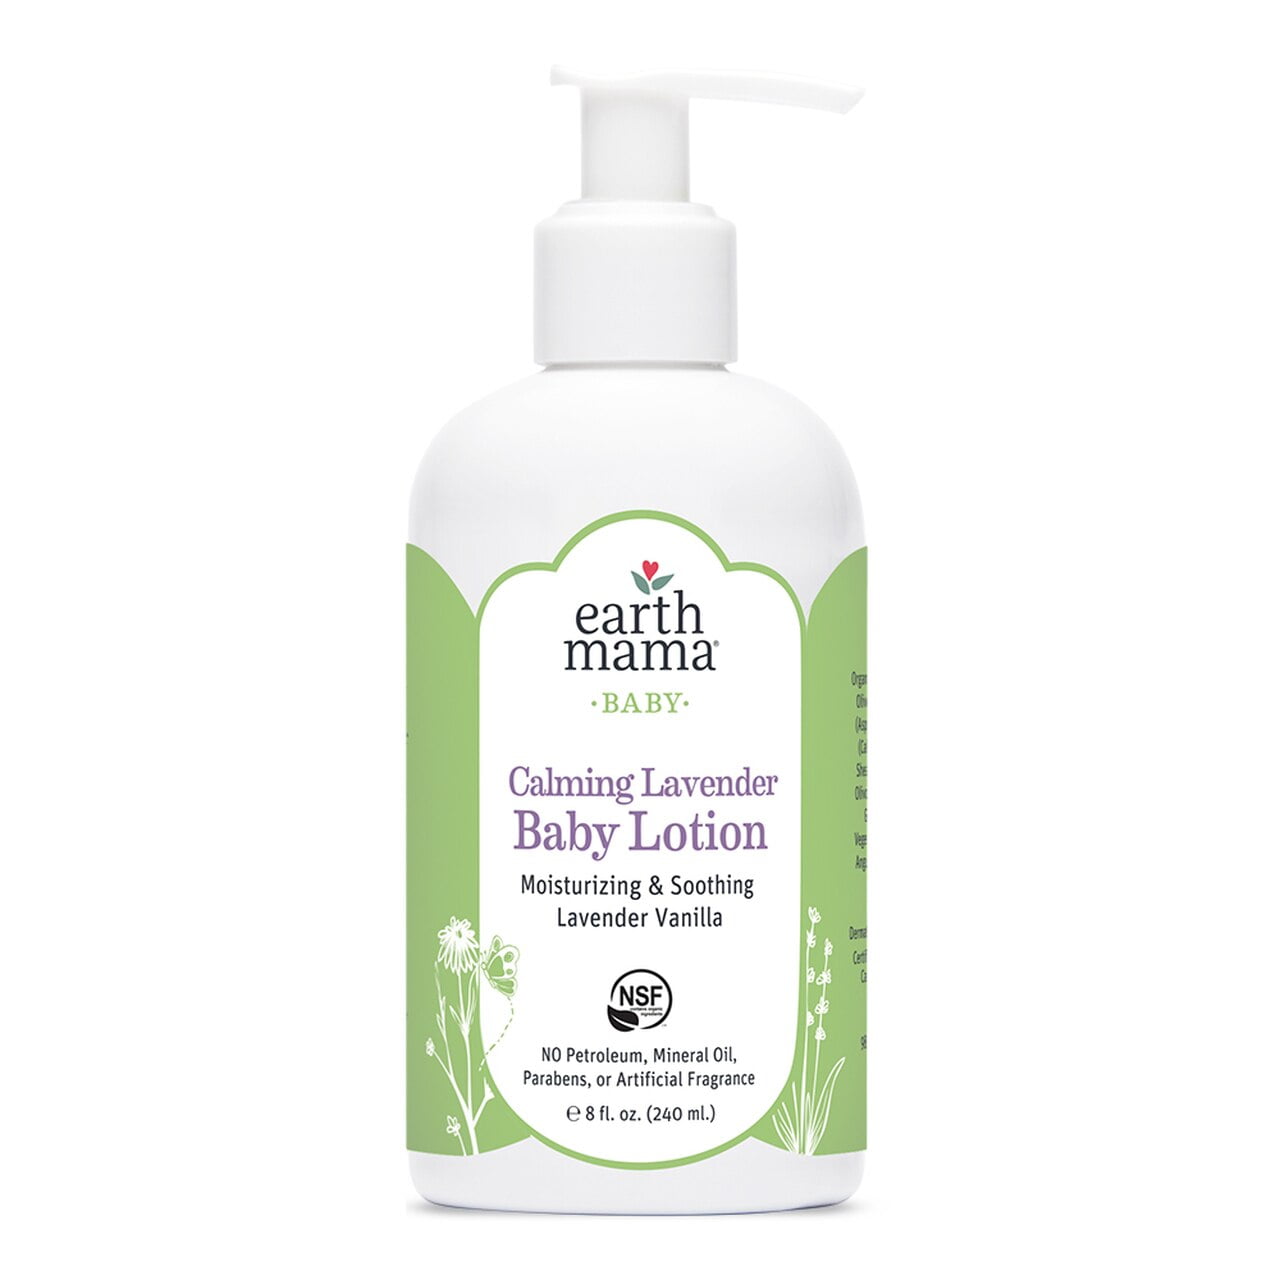 Earth mama organics calming lavender baby lotion 1